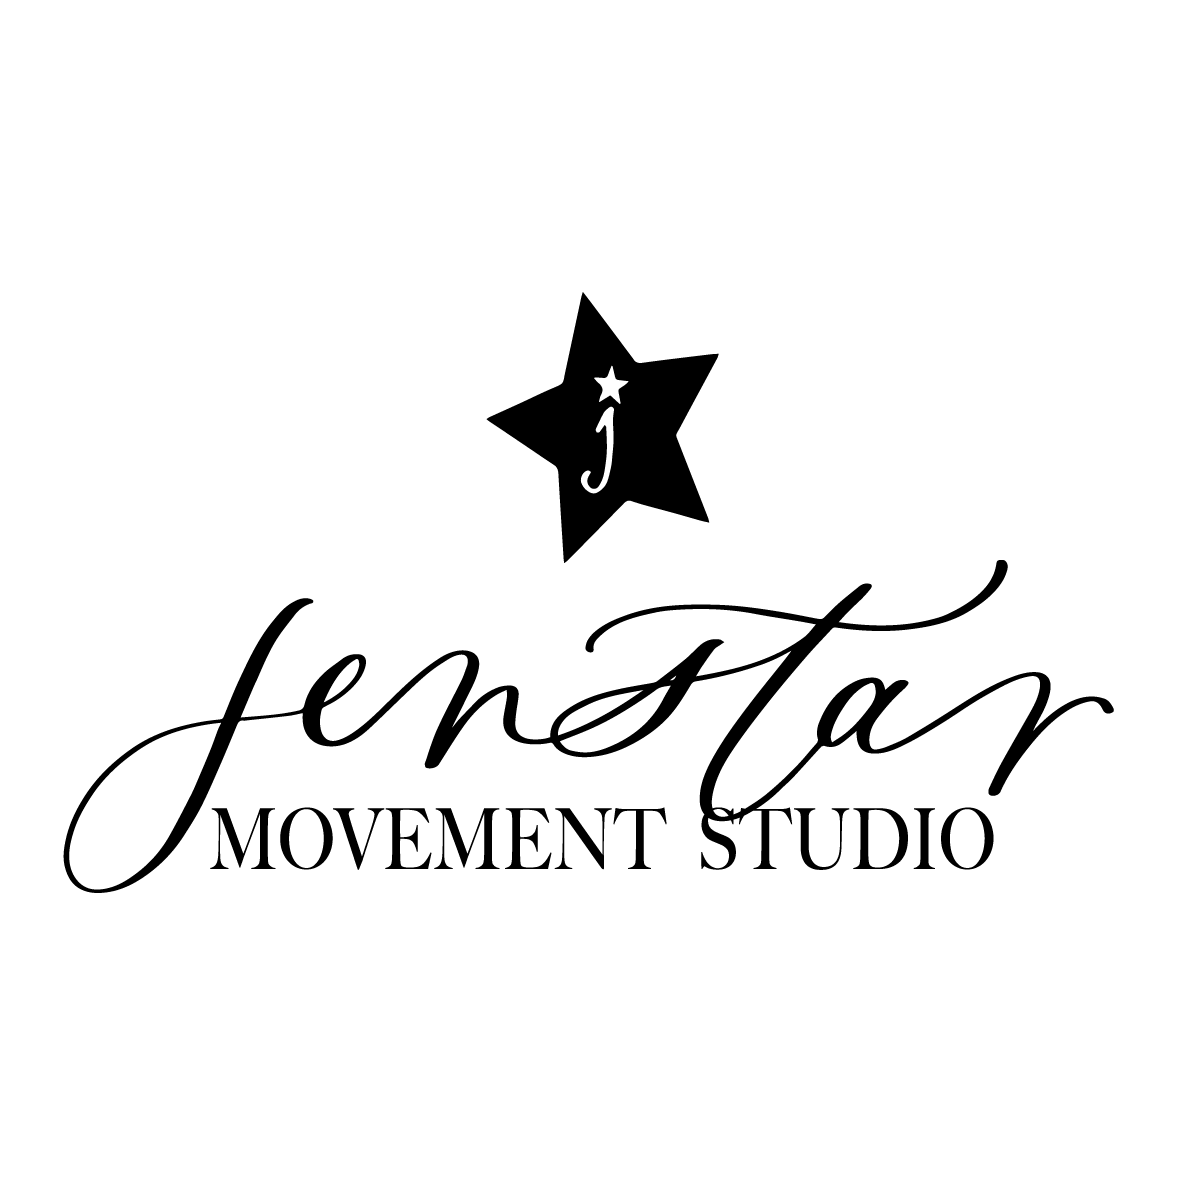 Welcome to Jenstar Movement Studio, Yoga, Barre, & Dance